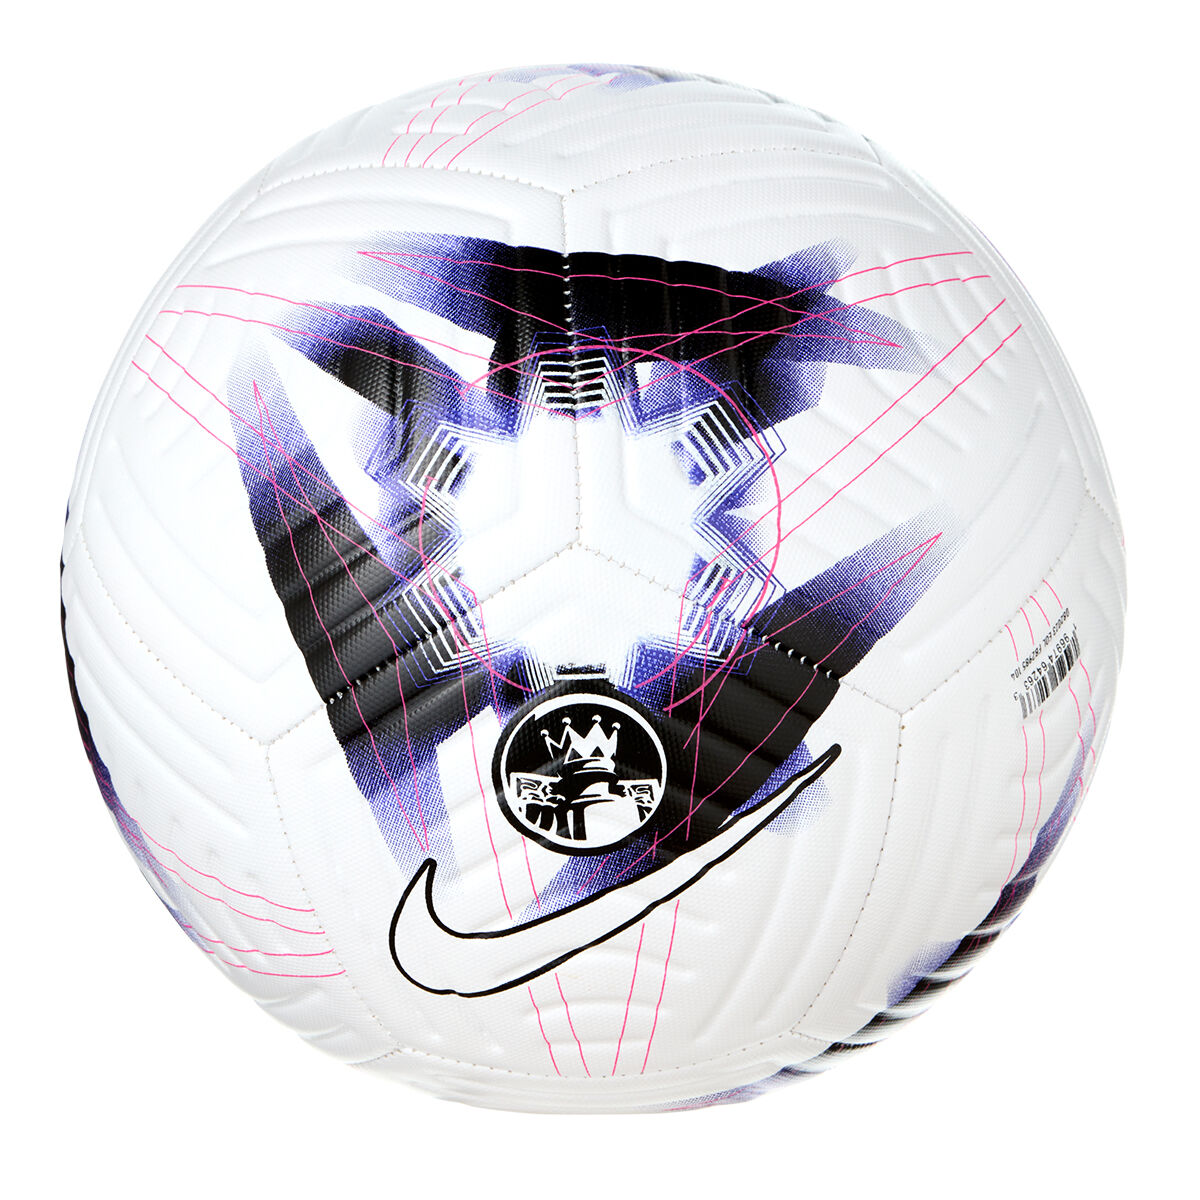 Buy Adidas Brazuca Mini World Cup Soccer Ball 1 White/multi Color